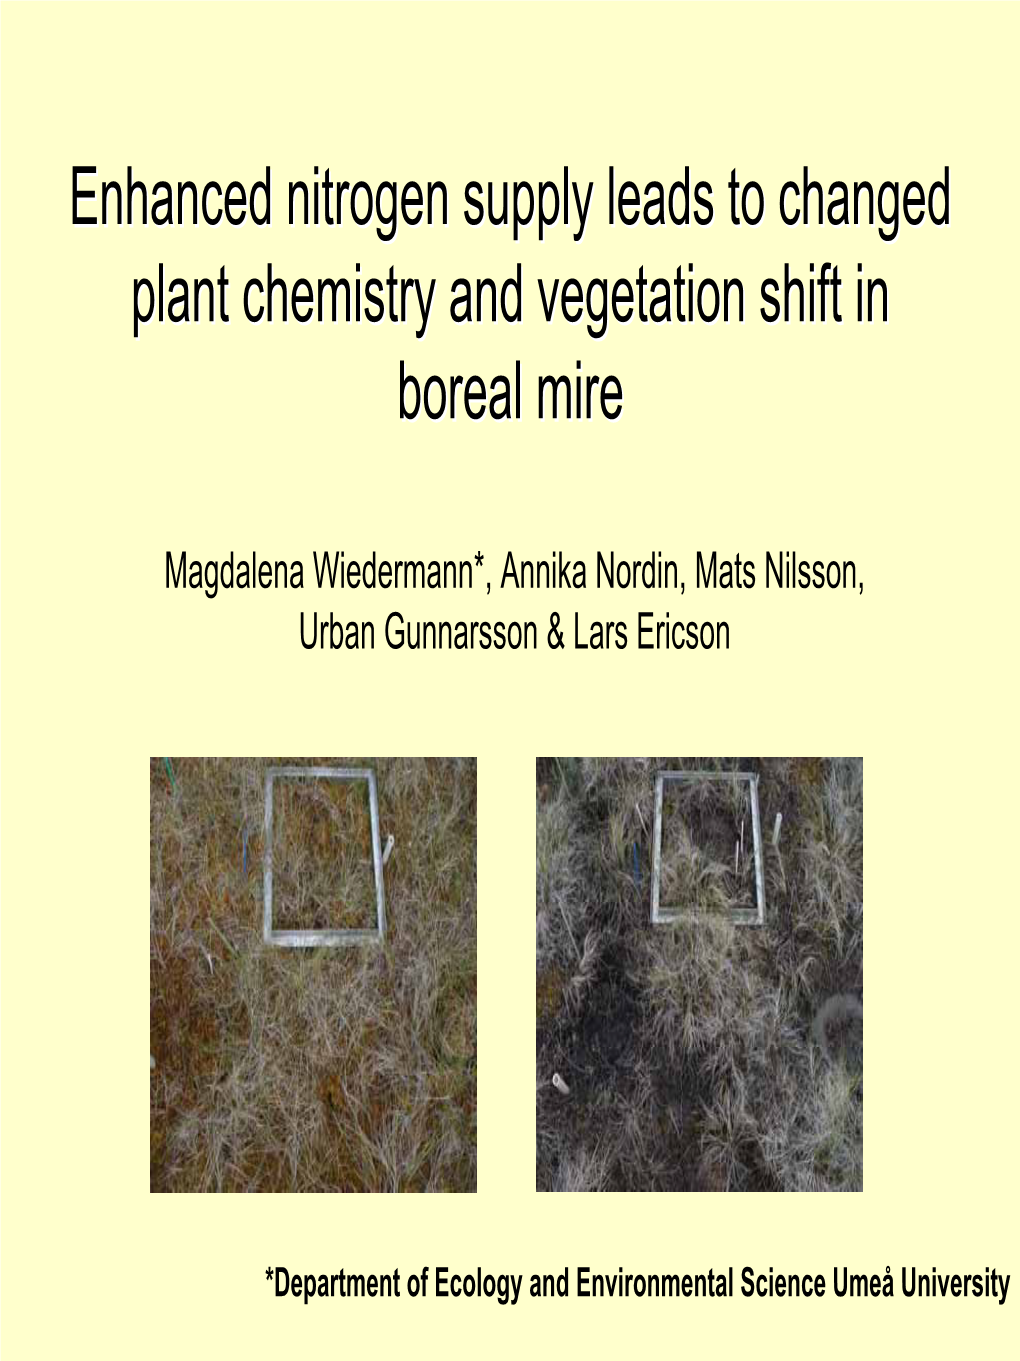 Plant Fungal Interactions & Vegetation Change Under Elevated Nitrogen Supply